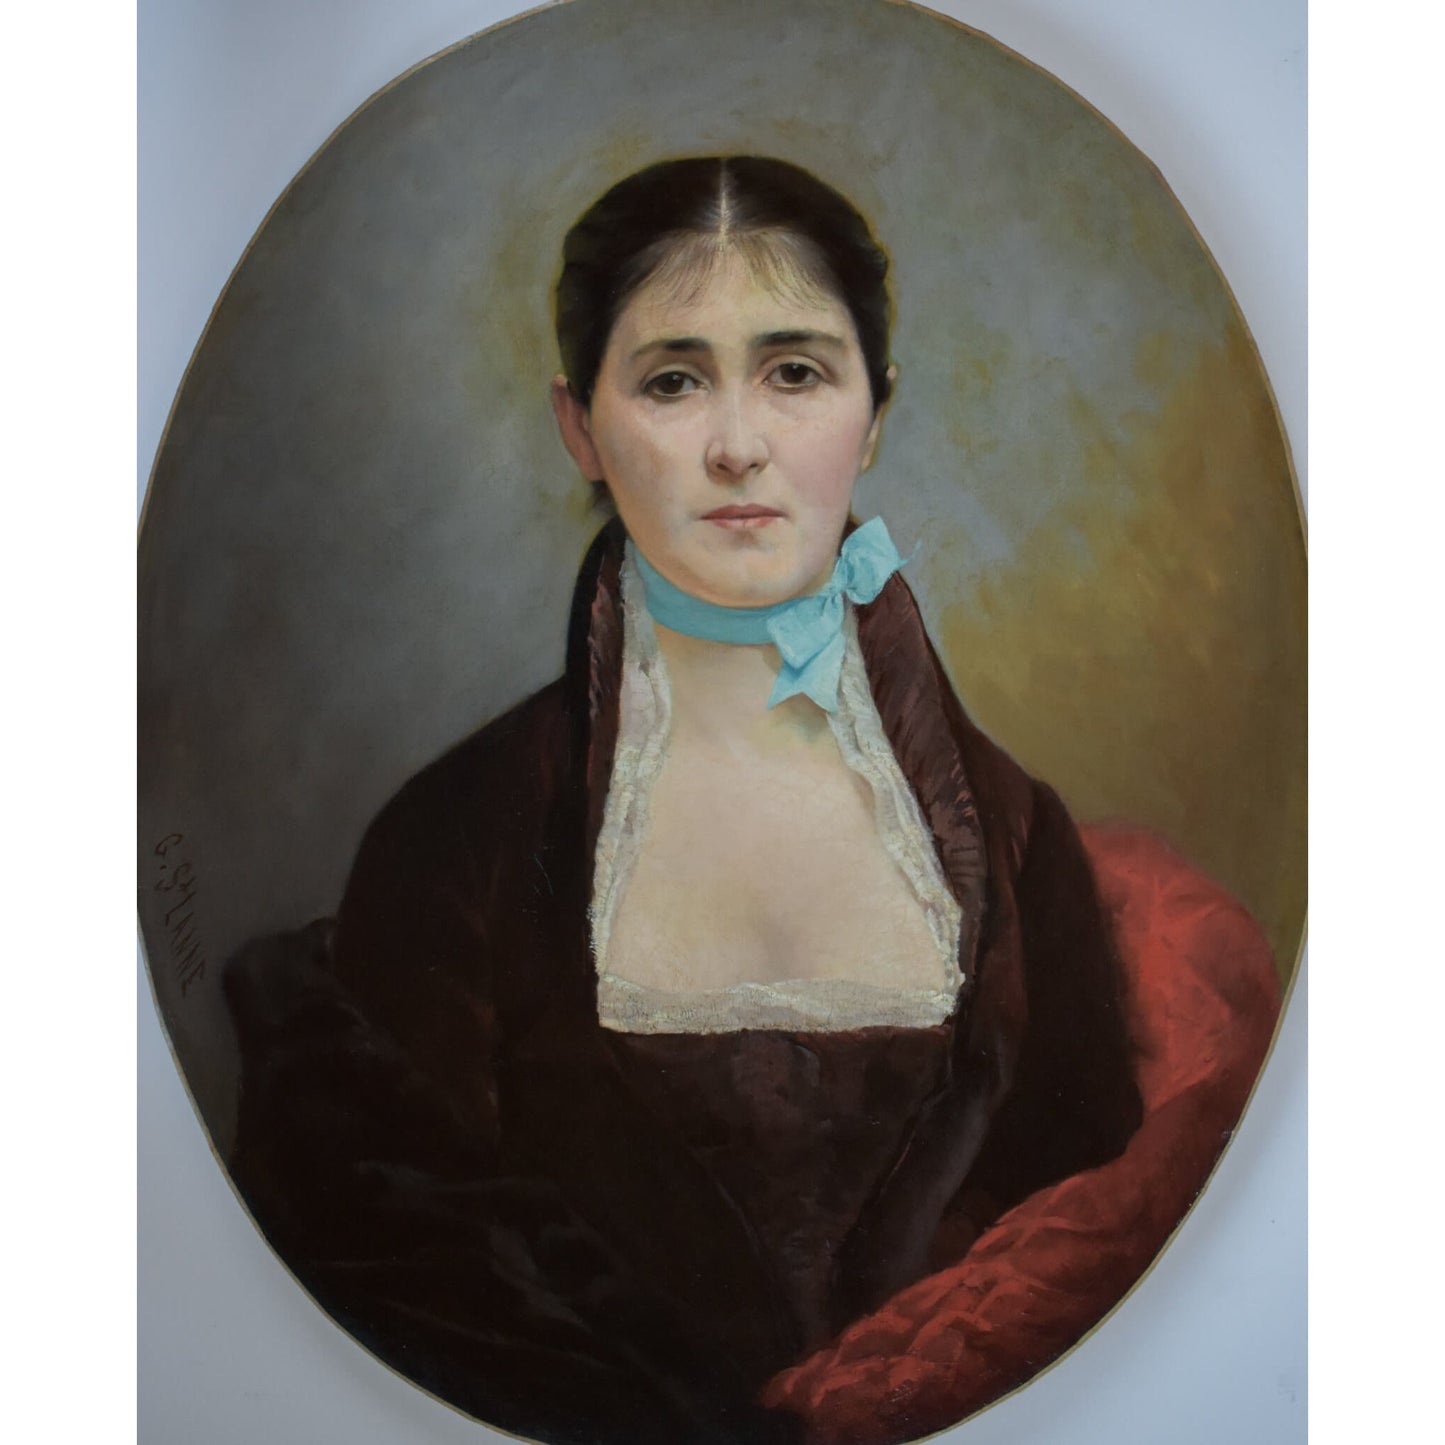 Antique portrait oval painting woman elegant dress 1878 by Georges Saint-Lanne for sale at Winckelmann Gallery